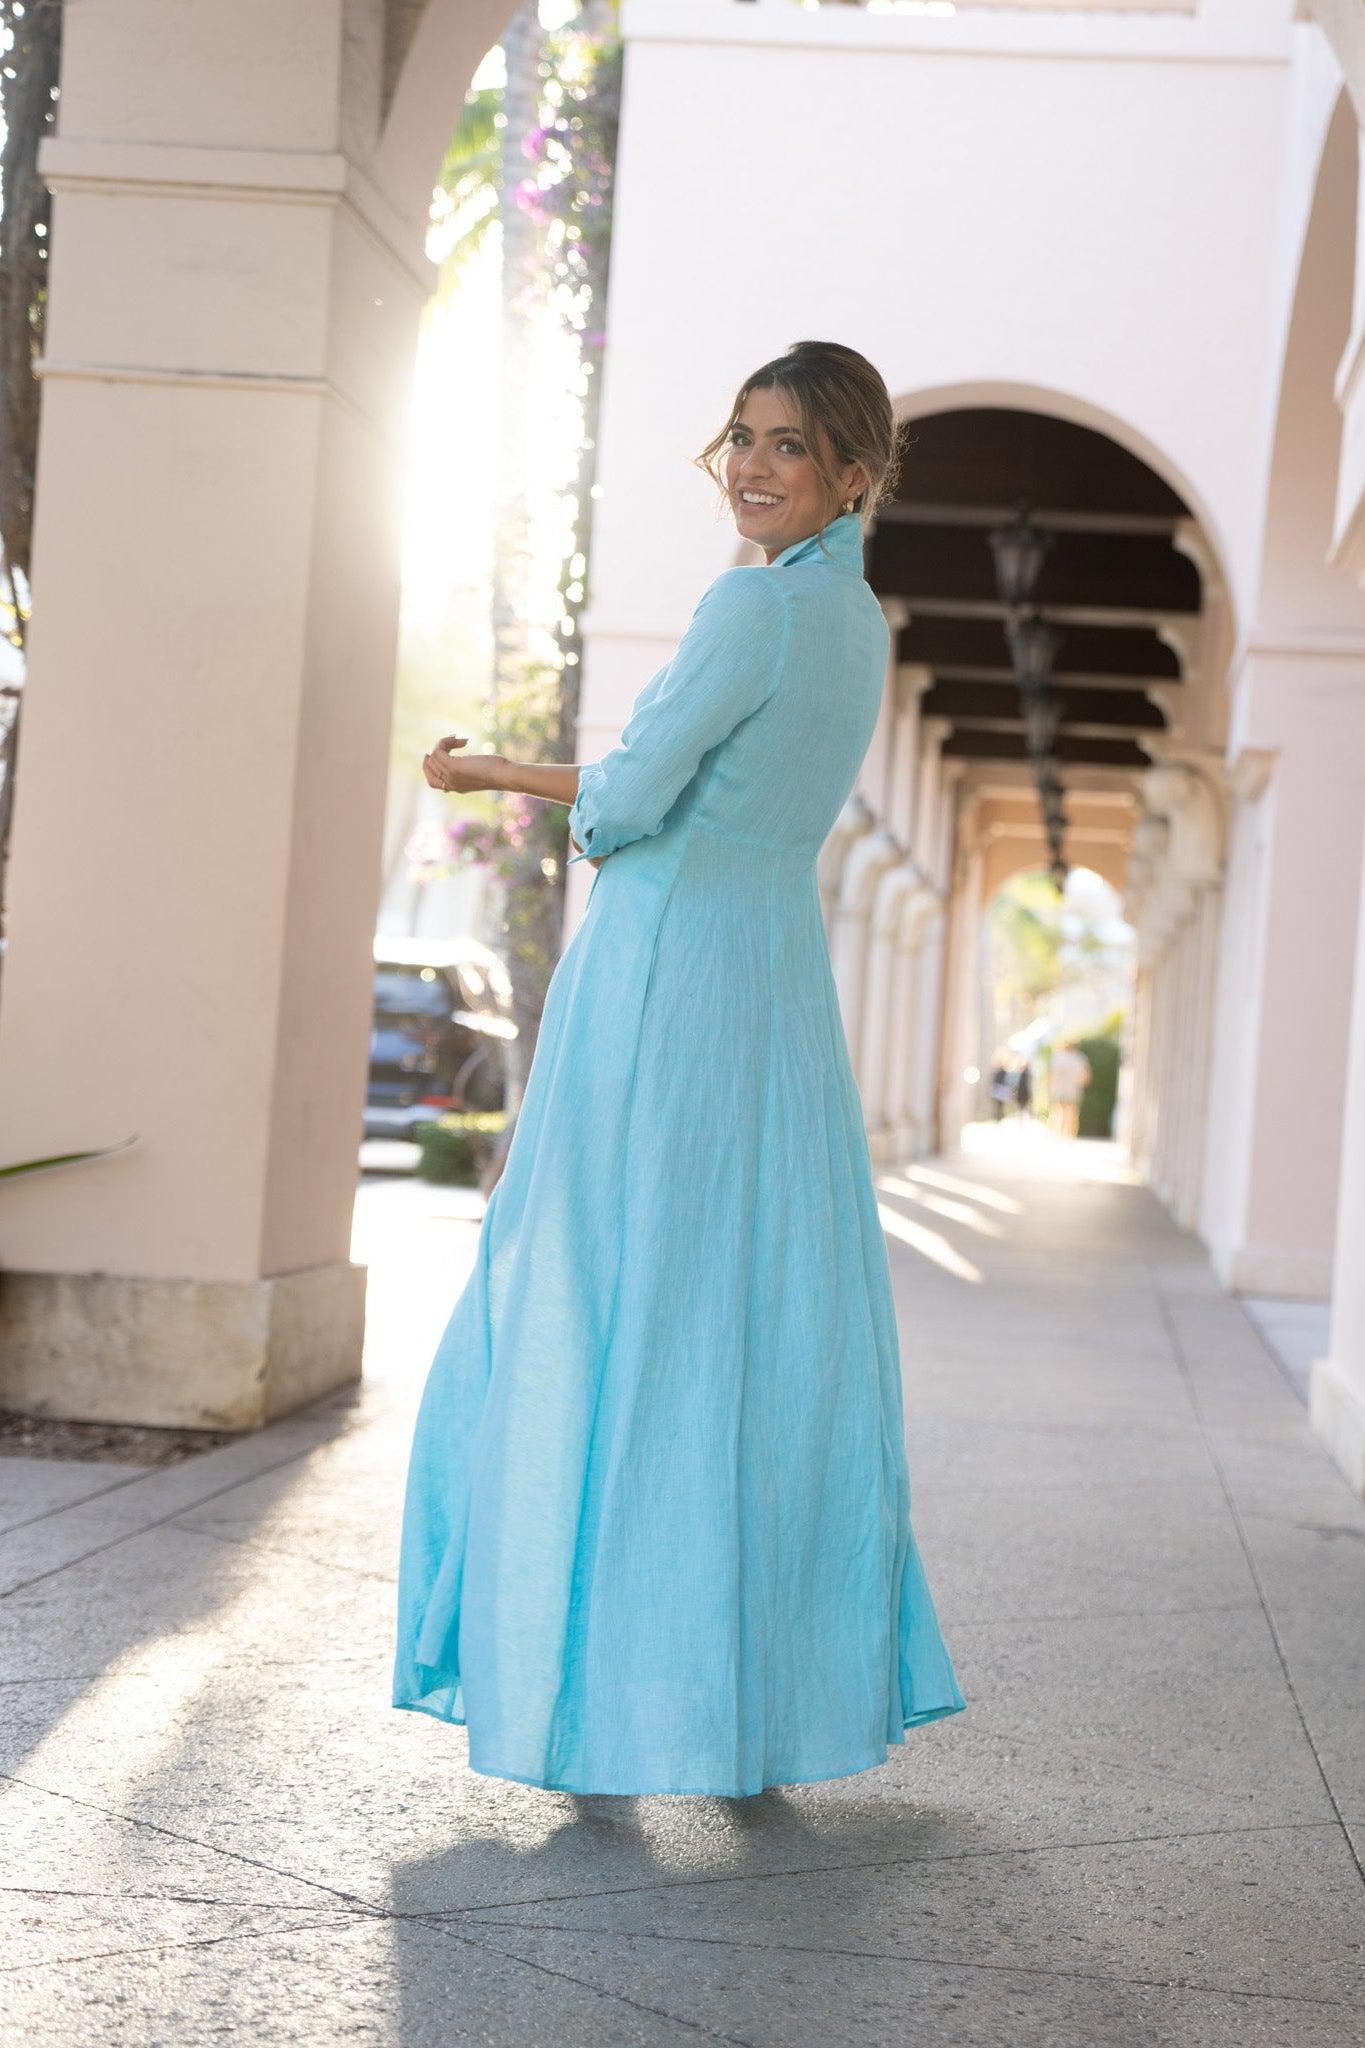 Spolverino Long Linen Dress Solid - Premium Dresses from Marina St. Barth - Just $450.00! Shop now at Marina St Barth